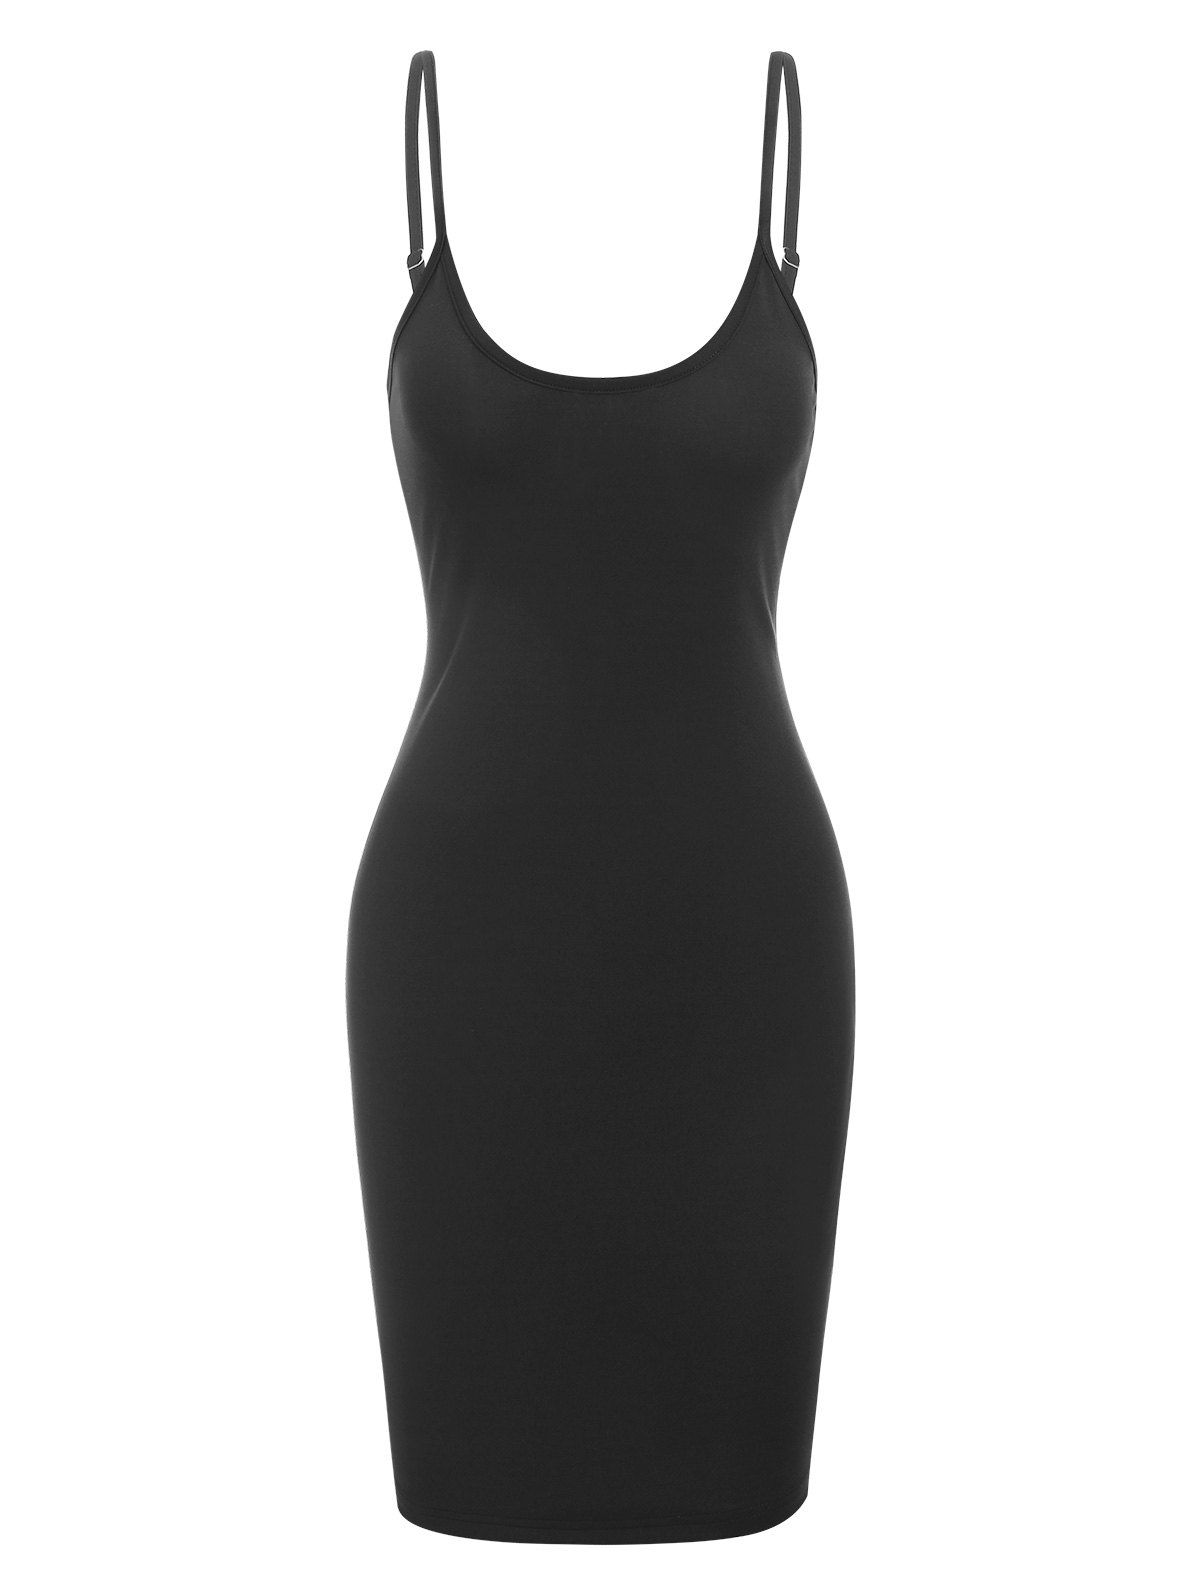 Spaghetti Strap Plain Mini Bodycon Dress - BLACK M